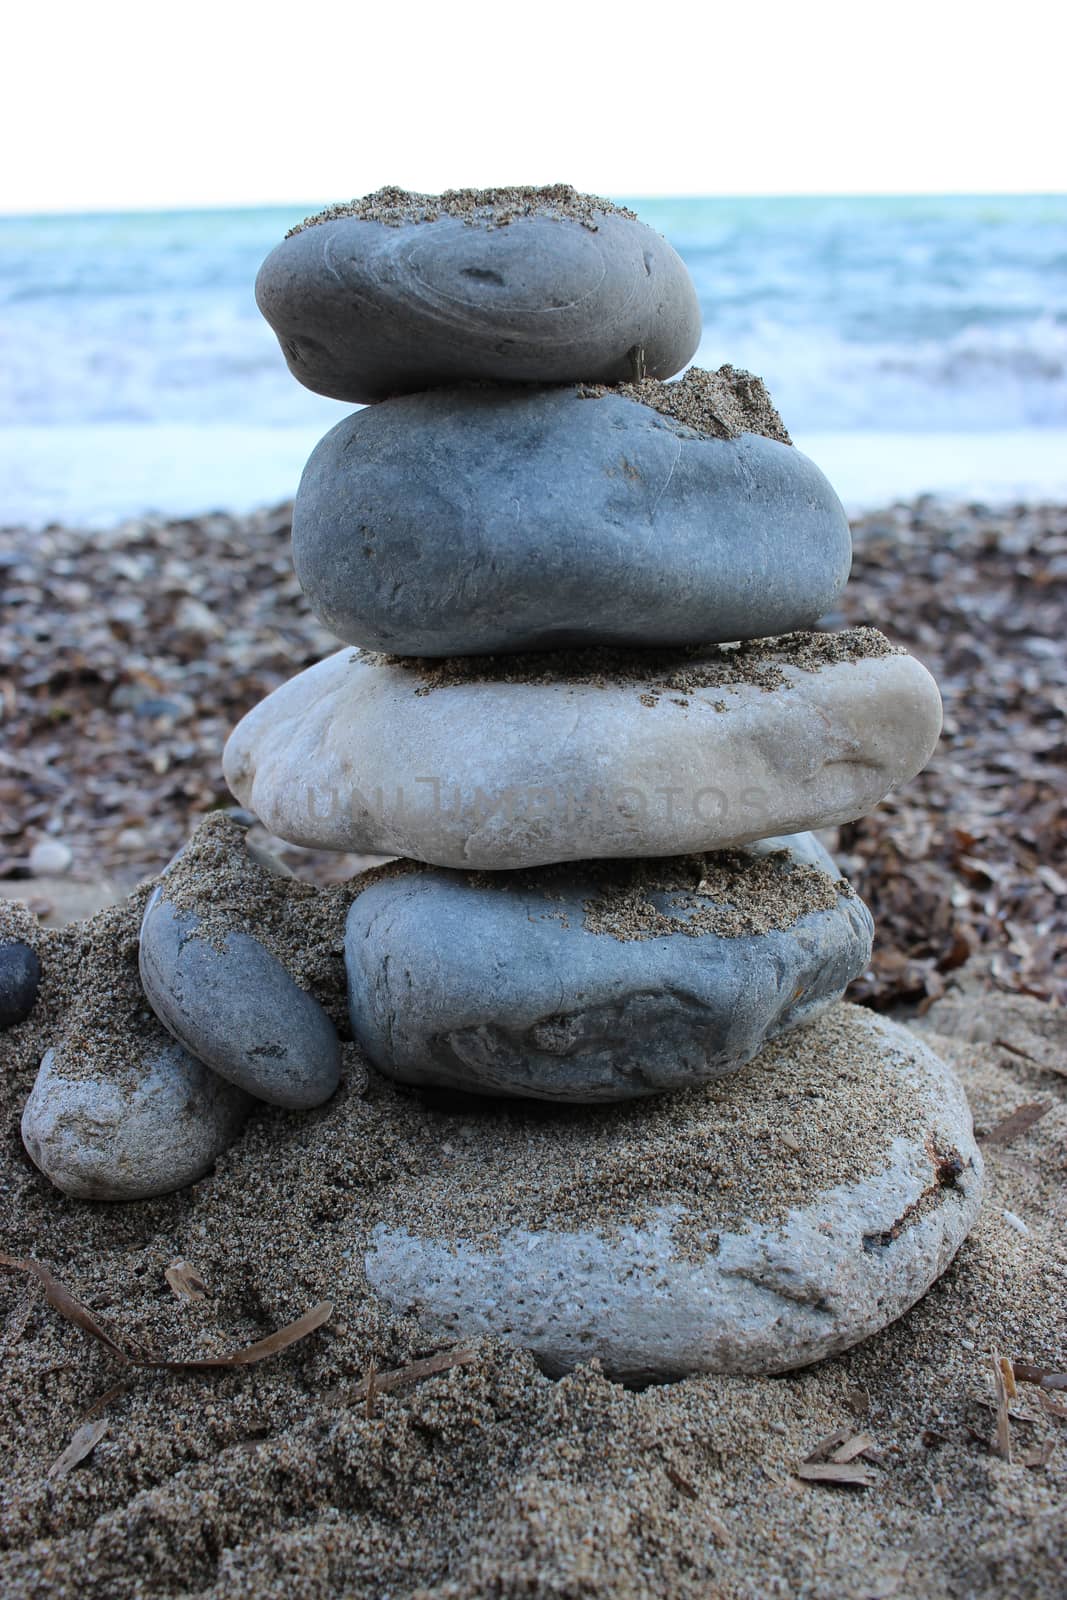 Stones Pyramid on The Beach Symbolizing Zen and Harmony